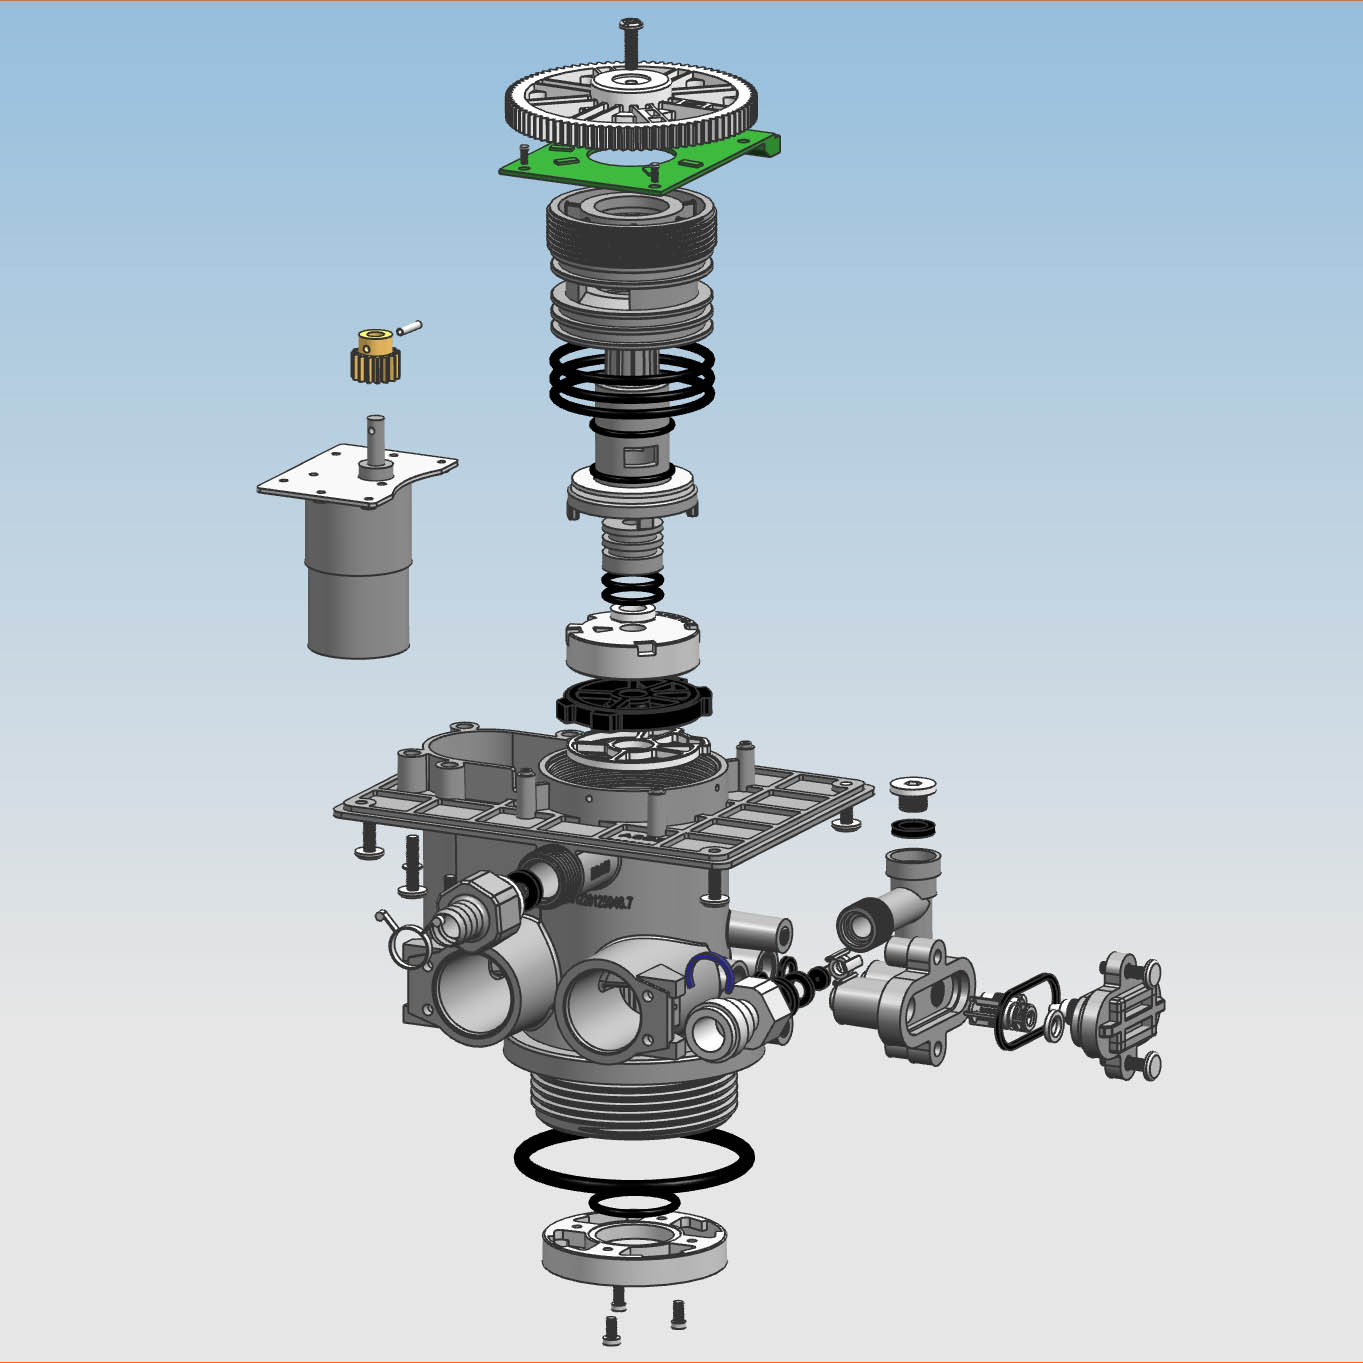 ASDU2-LED 2 ton Automatic softener valve downflow upflow type